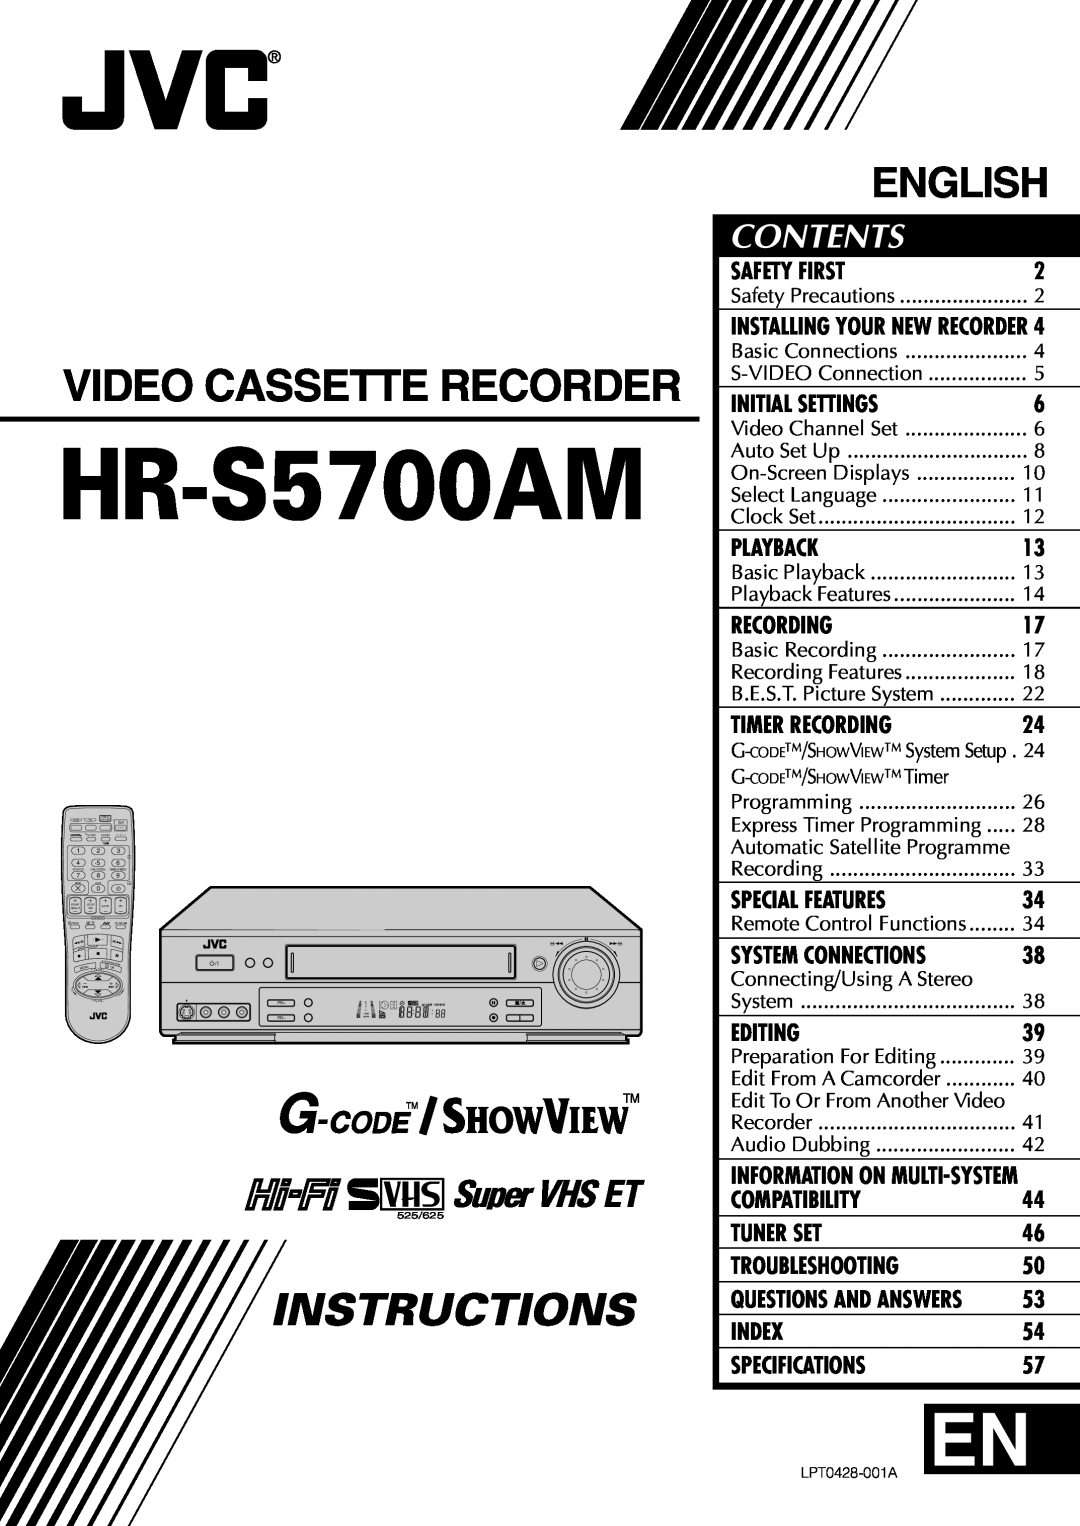 JVC LPT0428-001A specifications HR-S5700AM, Video Cassette Recorder, Instructions, English, Contents 